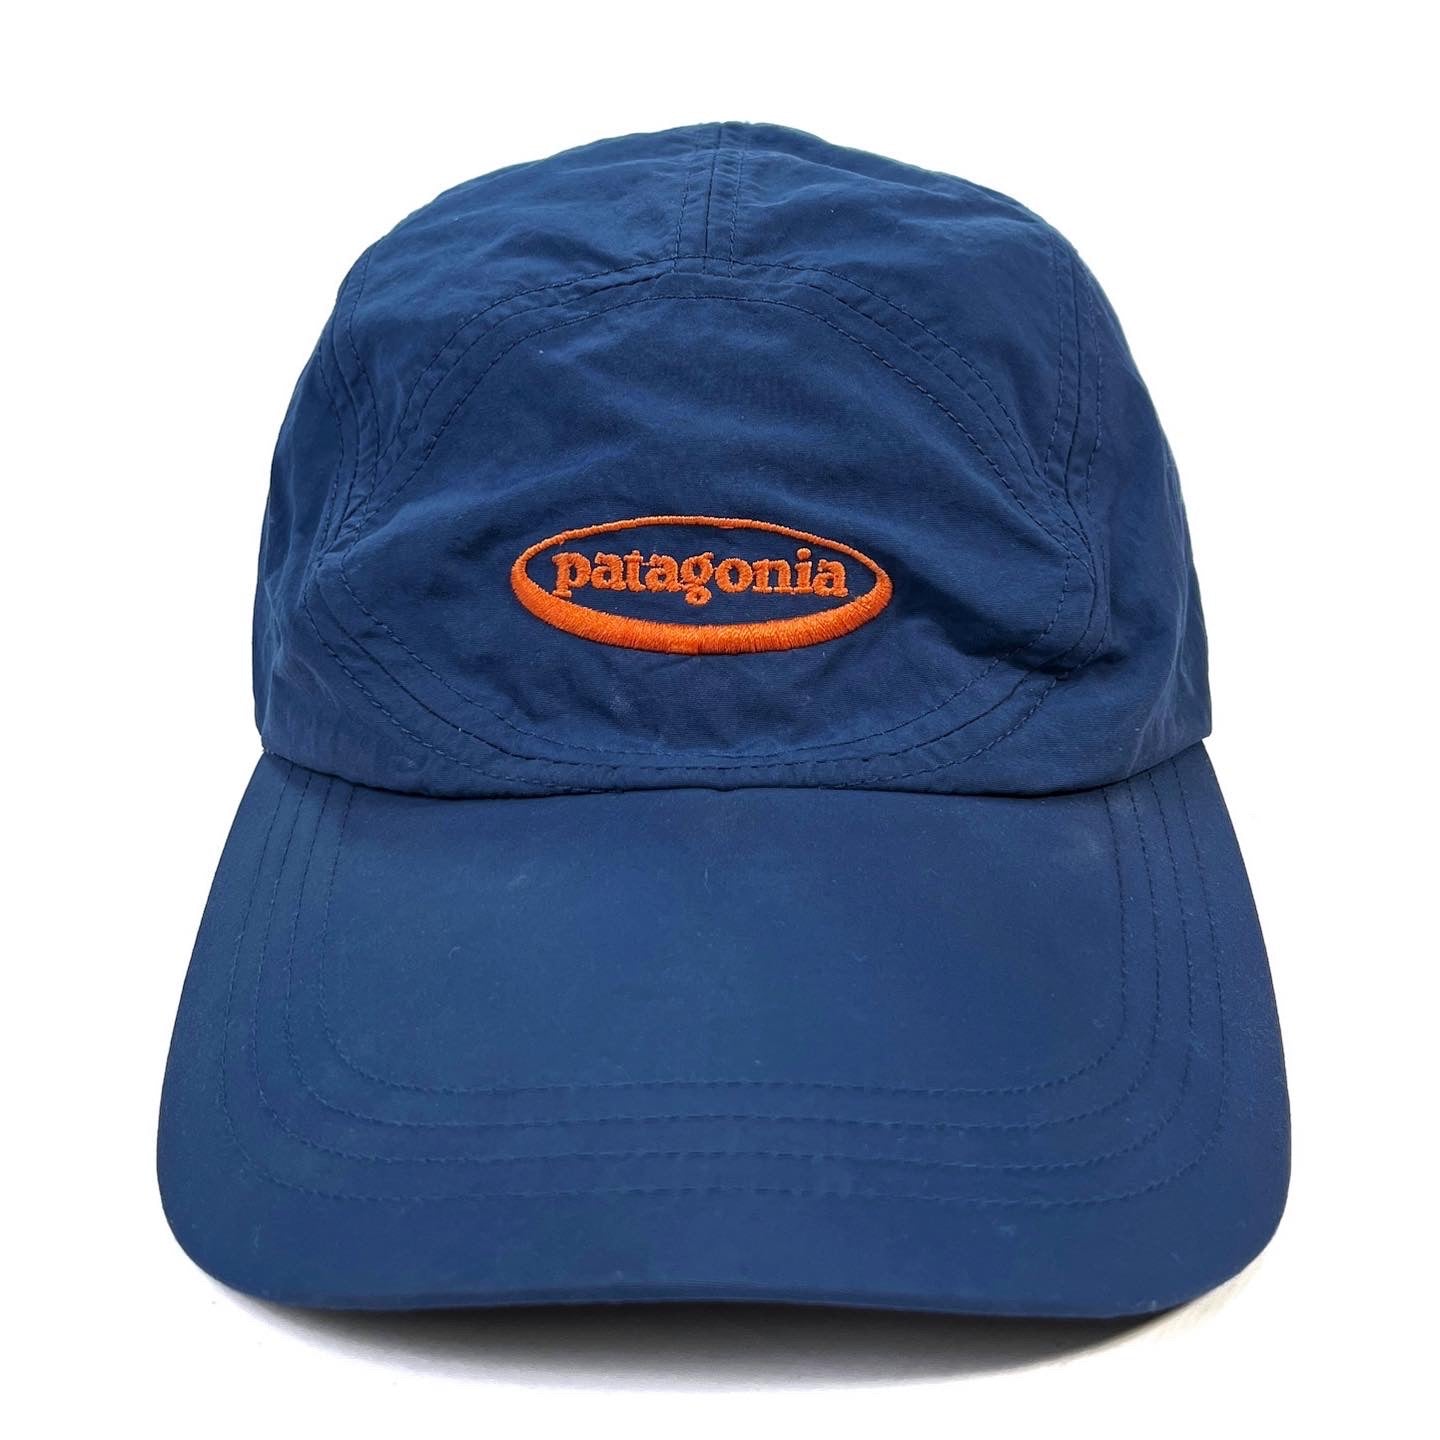 2003 Patagonia Nylon Oval Logo Spoonbill Cap, Blue & Orange (M)